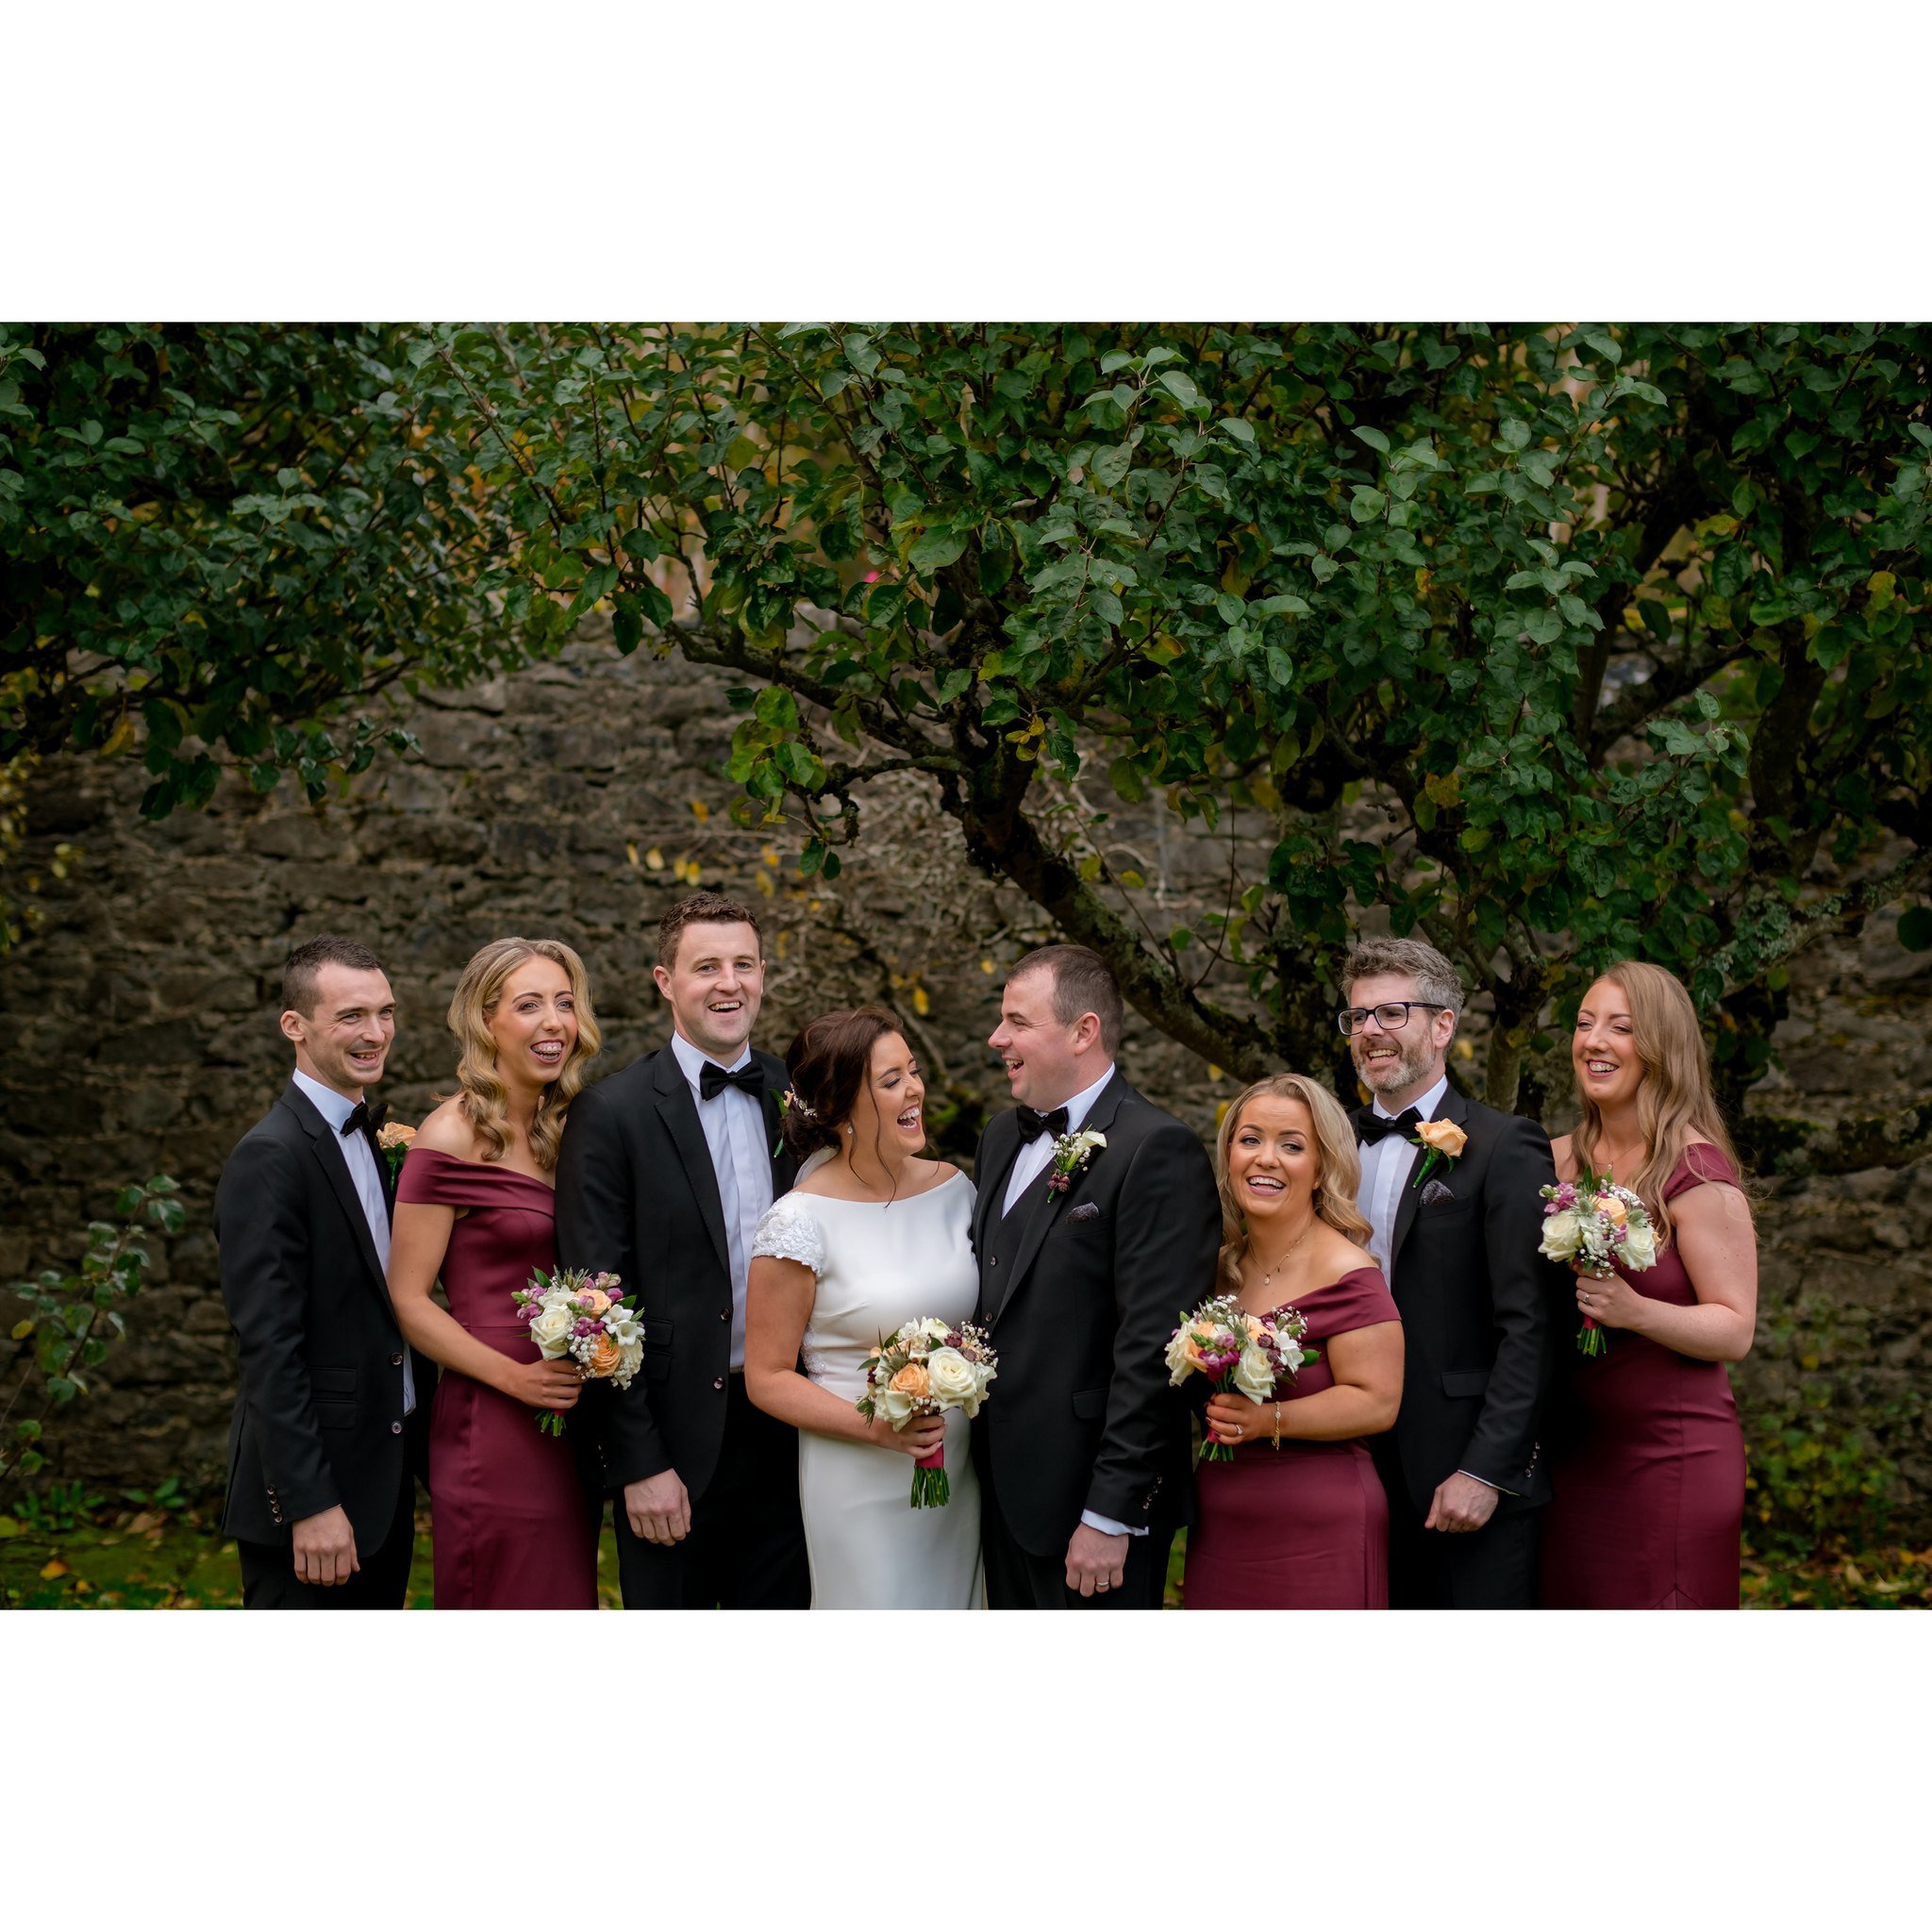 The next few months are going to be great craic!
&bull;
&bull;
www.leighparkephotography.com
&bull;
&bull;
#bridetobenorthernireland #fearlessphotographer 
#northernirelandbrides #northernirelandbride 
#irishbride #weddingday #weddingphotographer 
#w